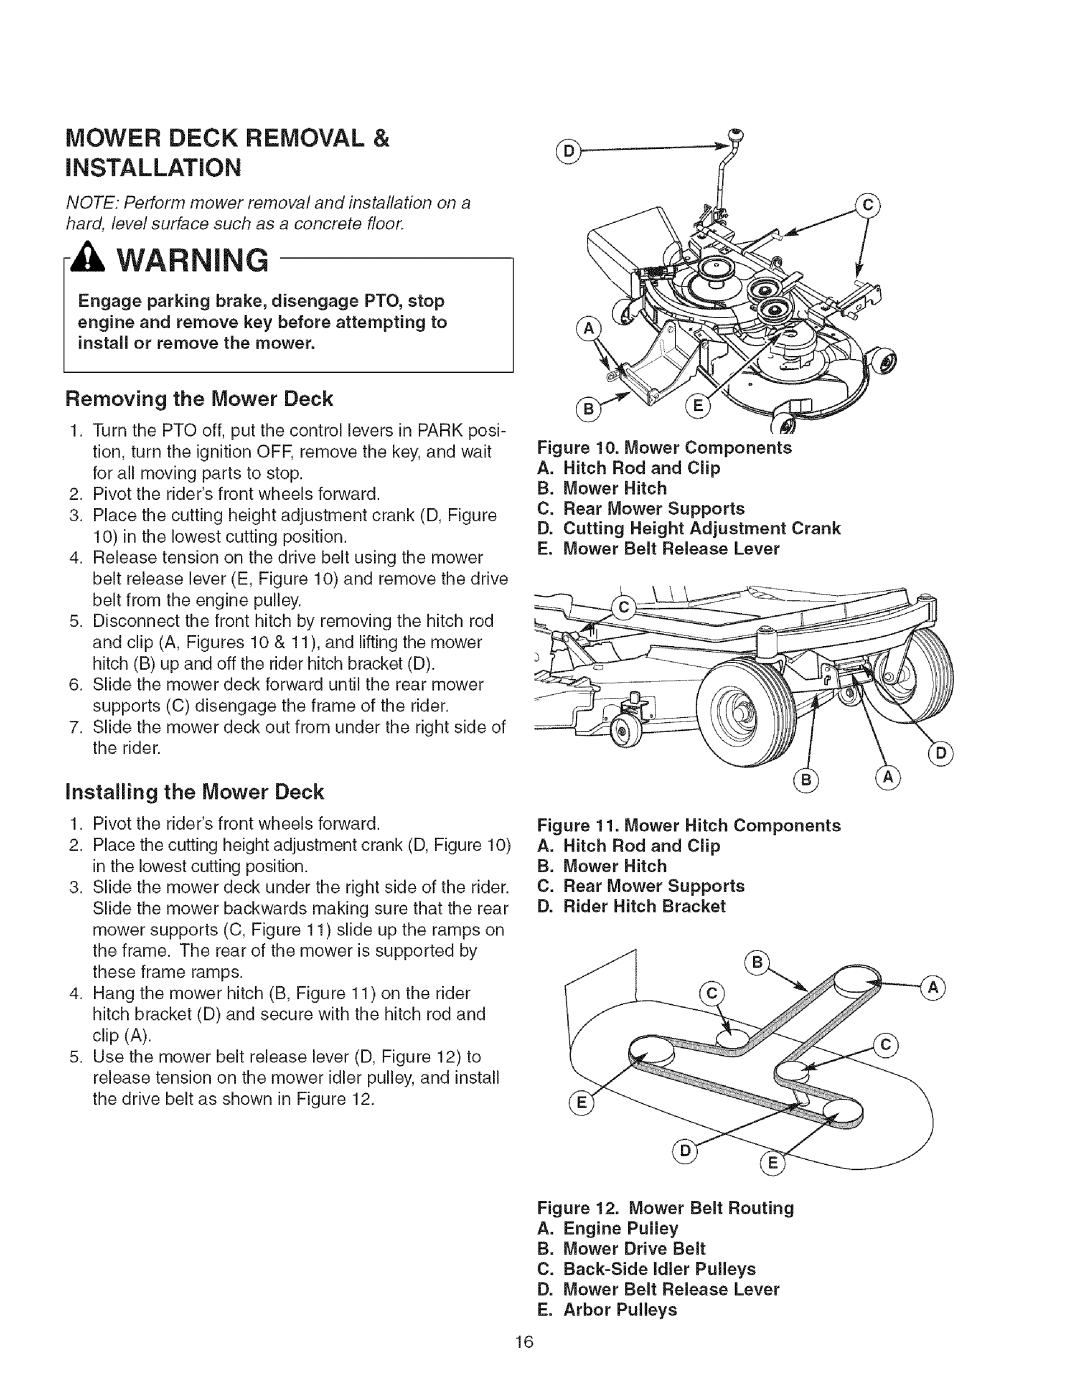 Craftsman 107.27768 manual Mower Deck Removal, Installation, Removing the Mower Deck, C. Back=Side Idler Pulleys 